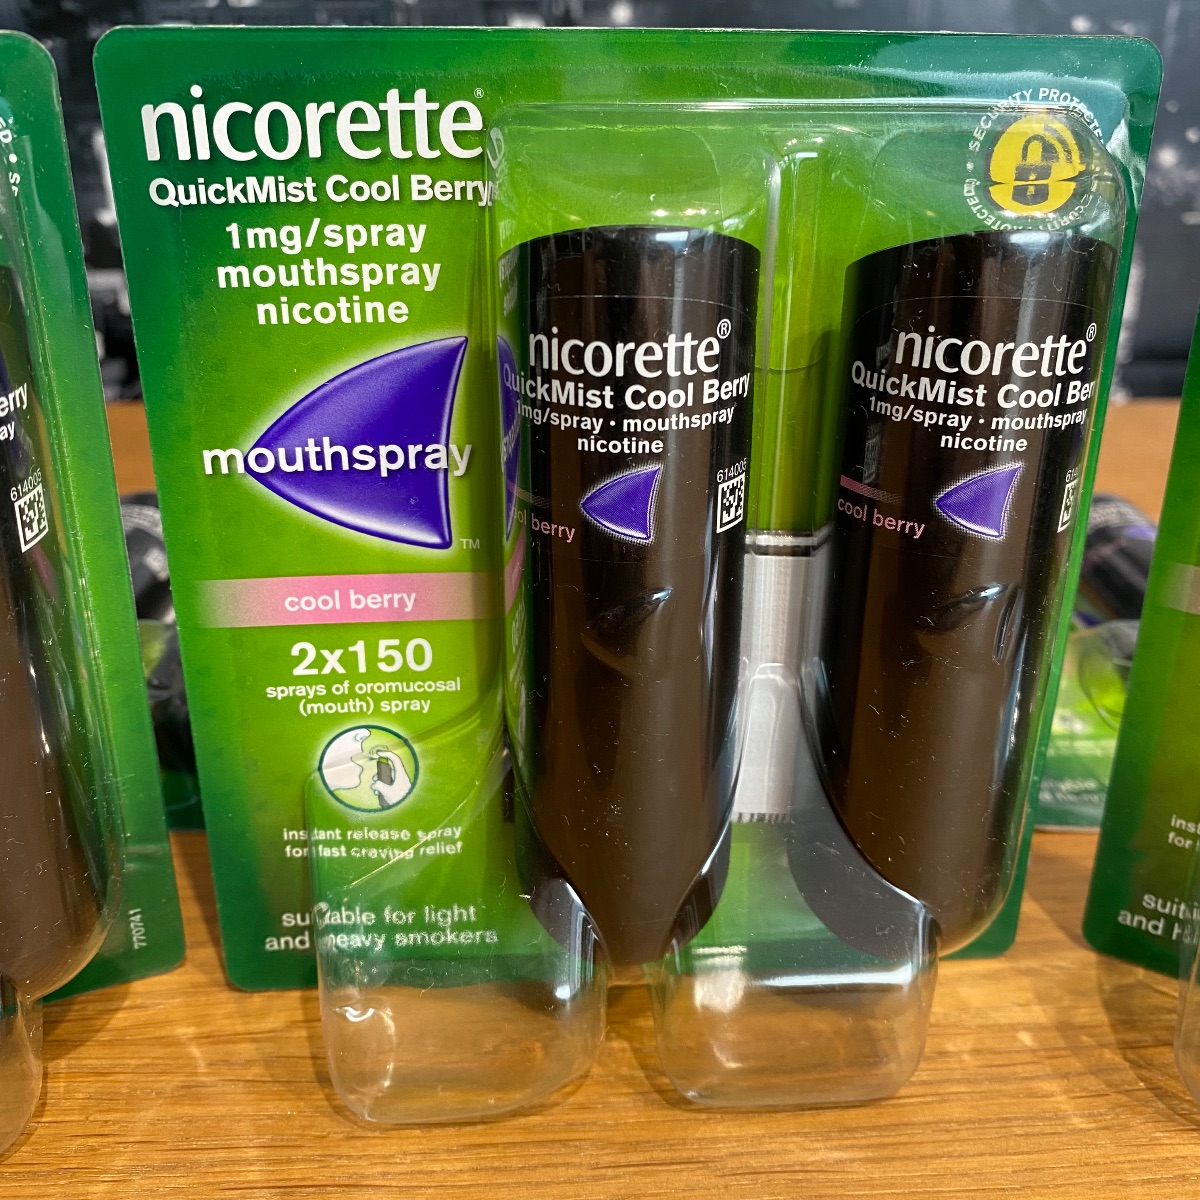 6 x Nicorette Quickmist Cool Berry Mouthspray 12 x 150 Sprays Nicotine Lot 69547 0691162051957 (Brand New)